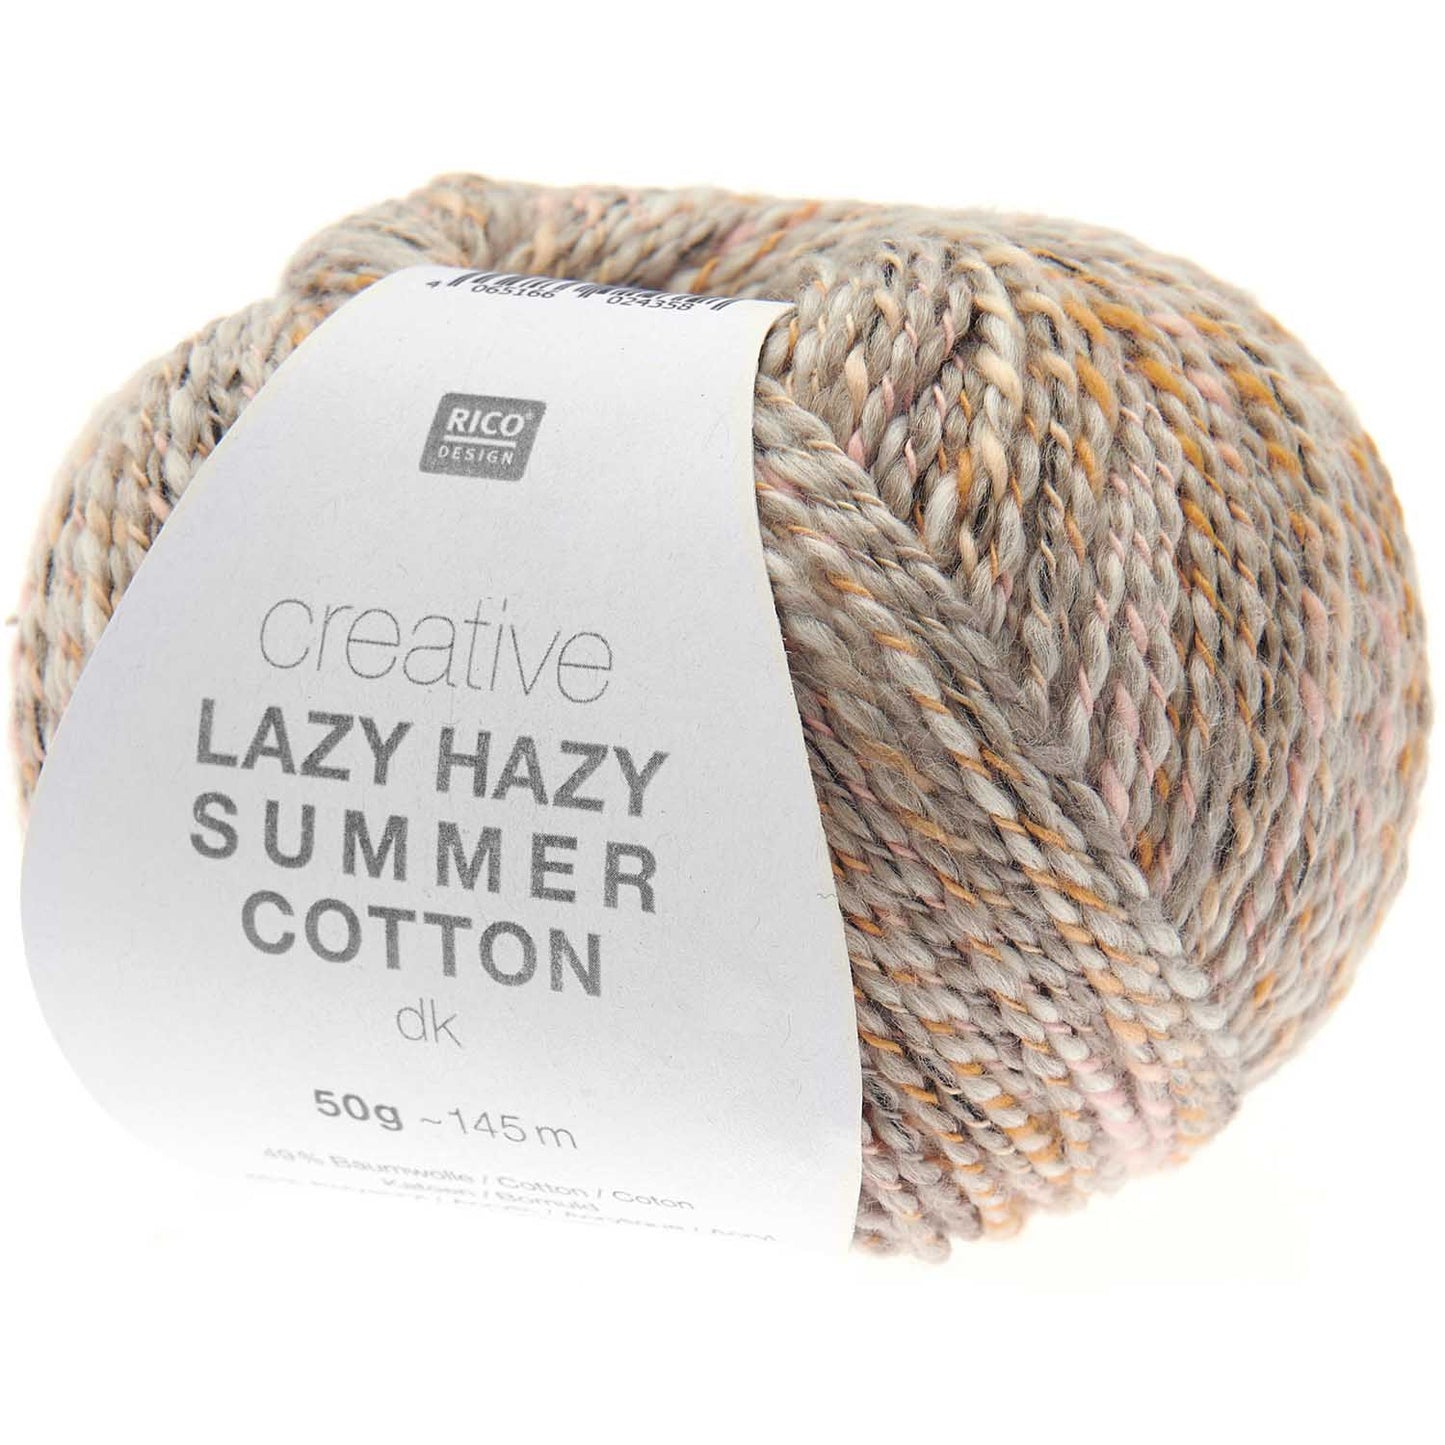 Creative Lazy Hazy Summer Cotton